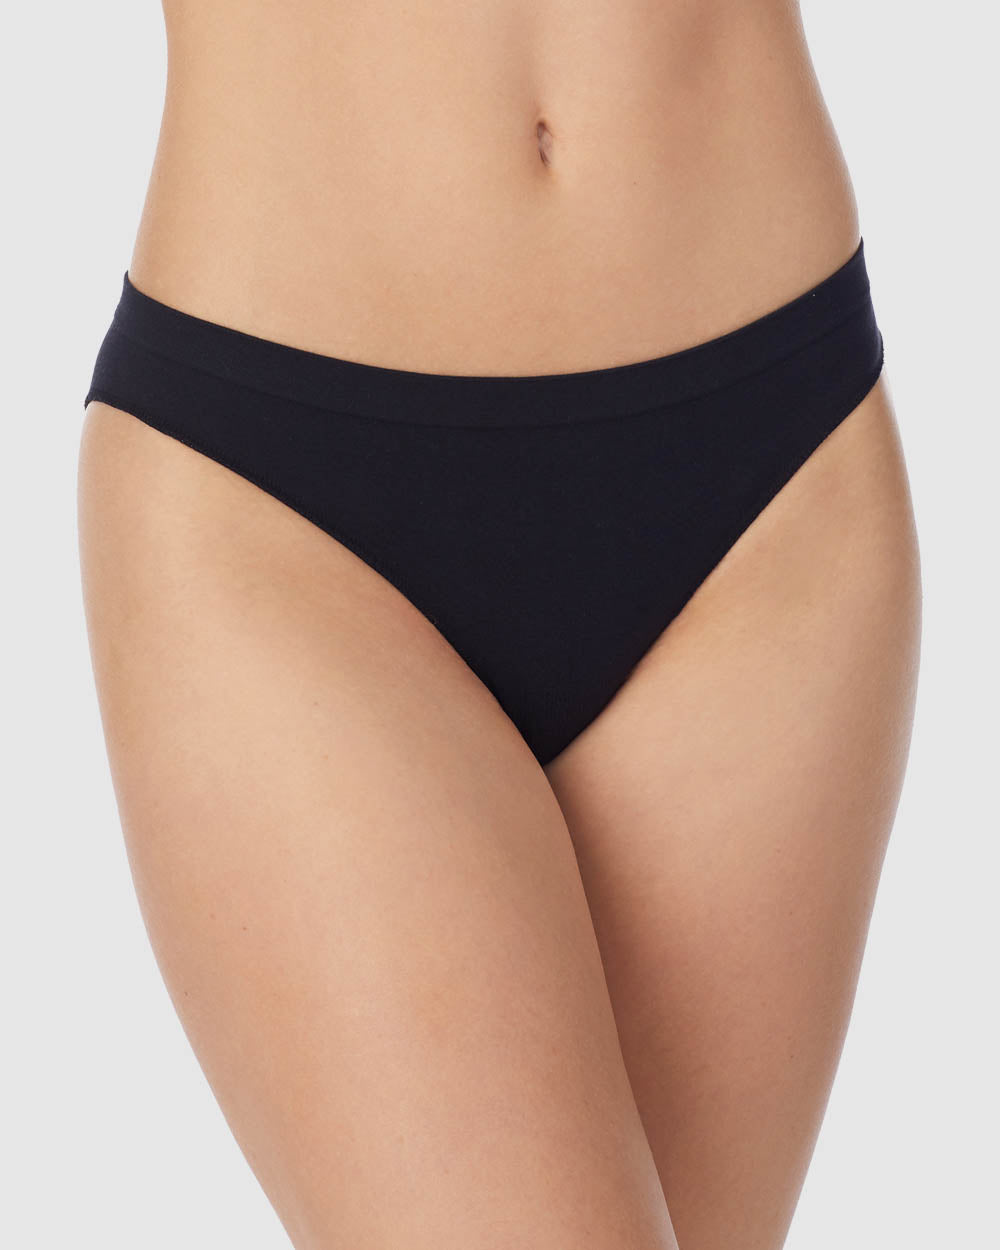 A lady wearing Black Cabana Cotton Seamless Bikini Underwear